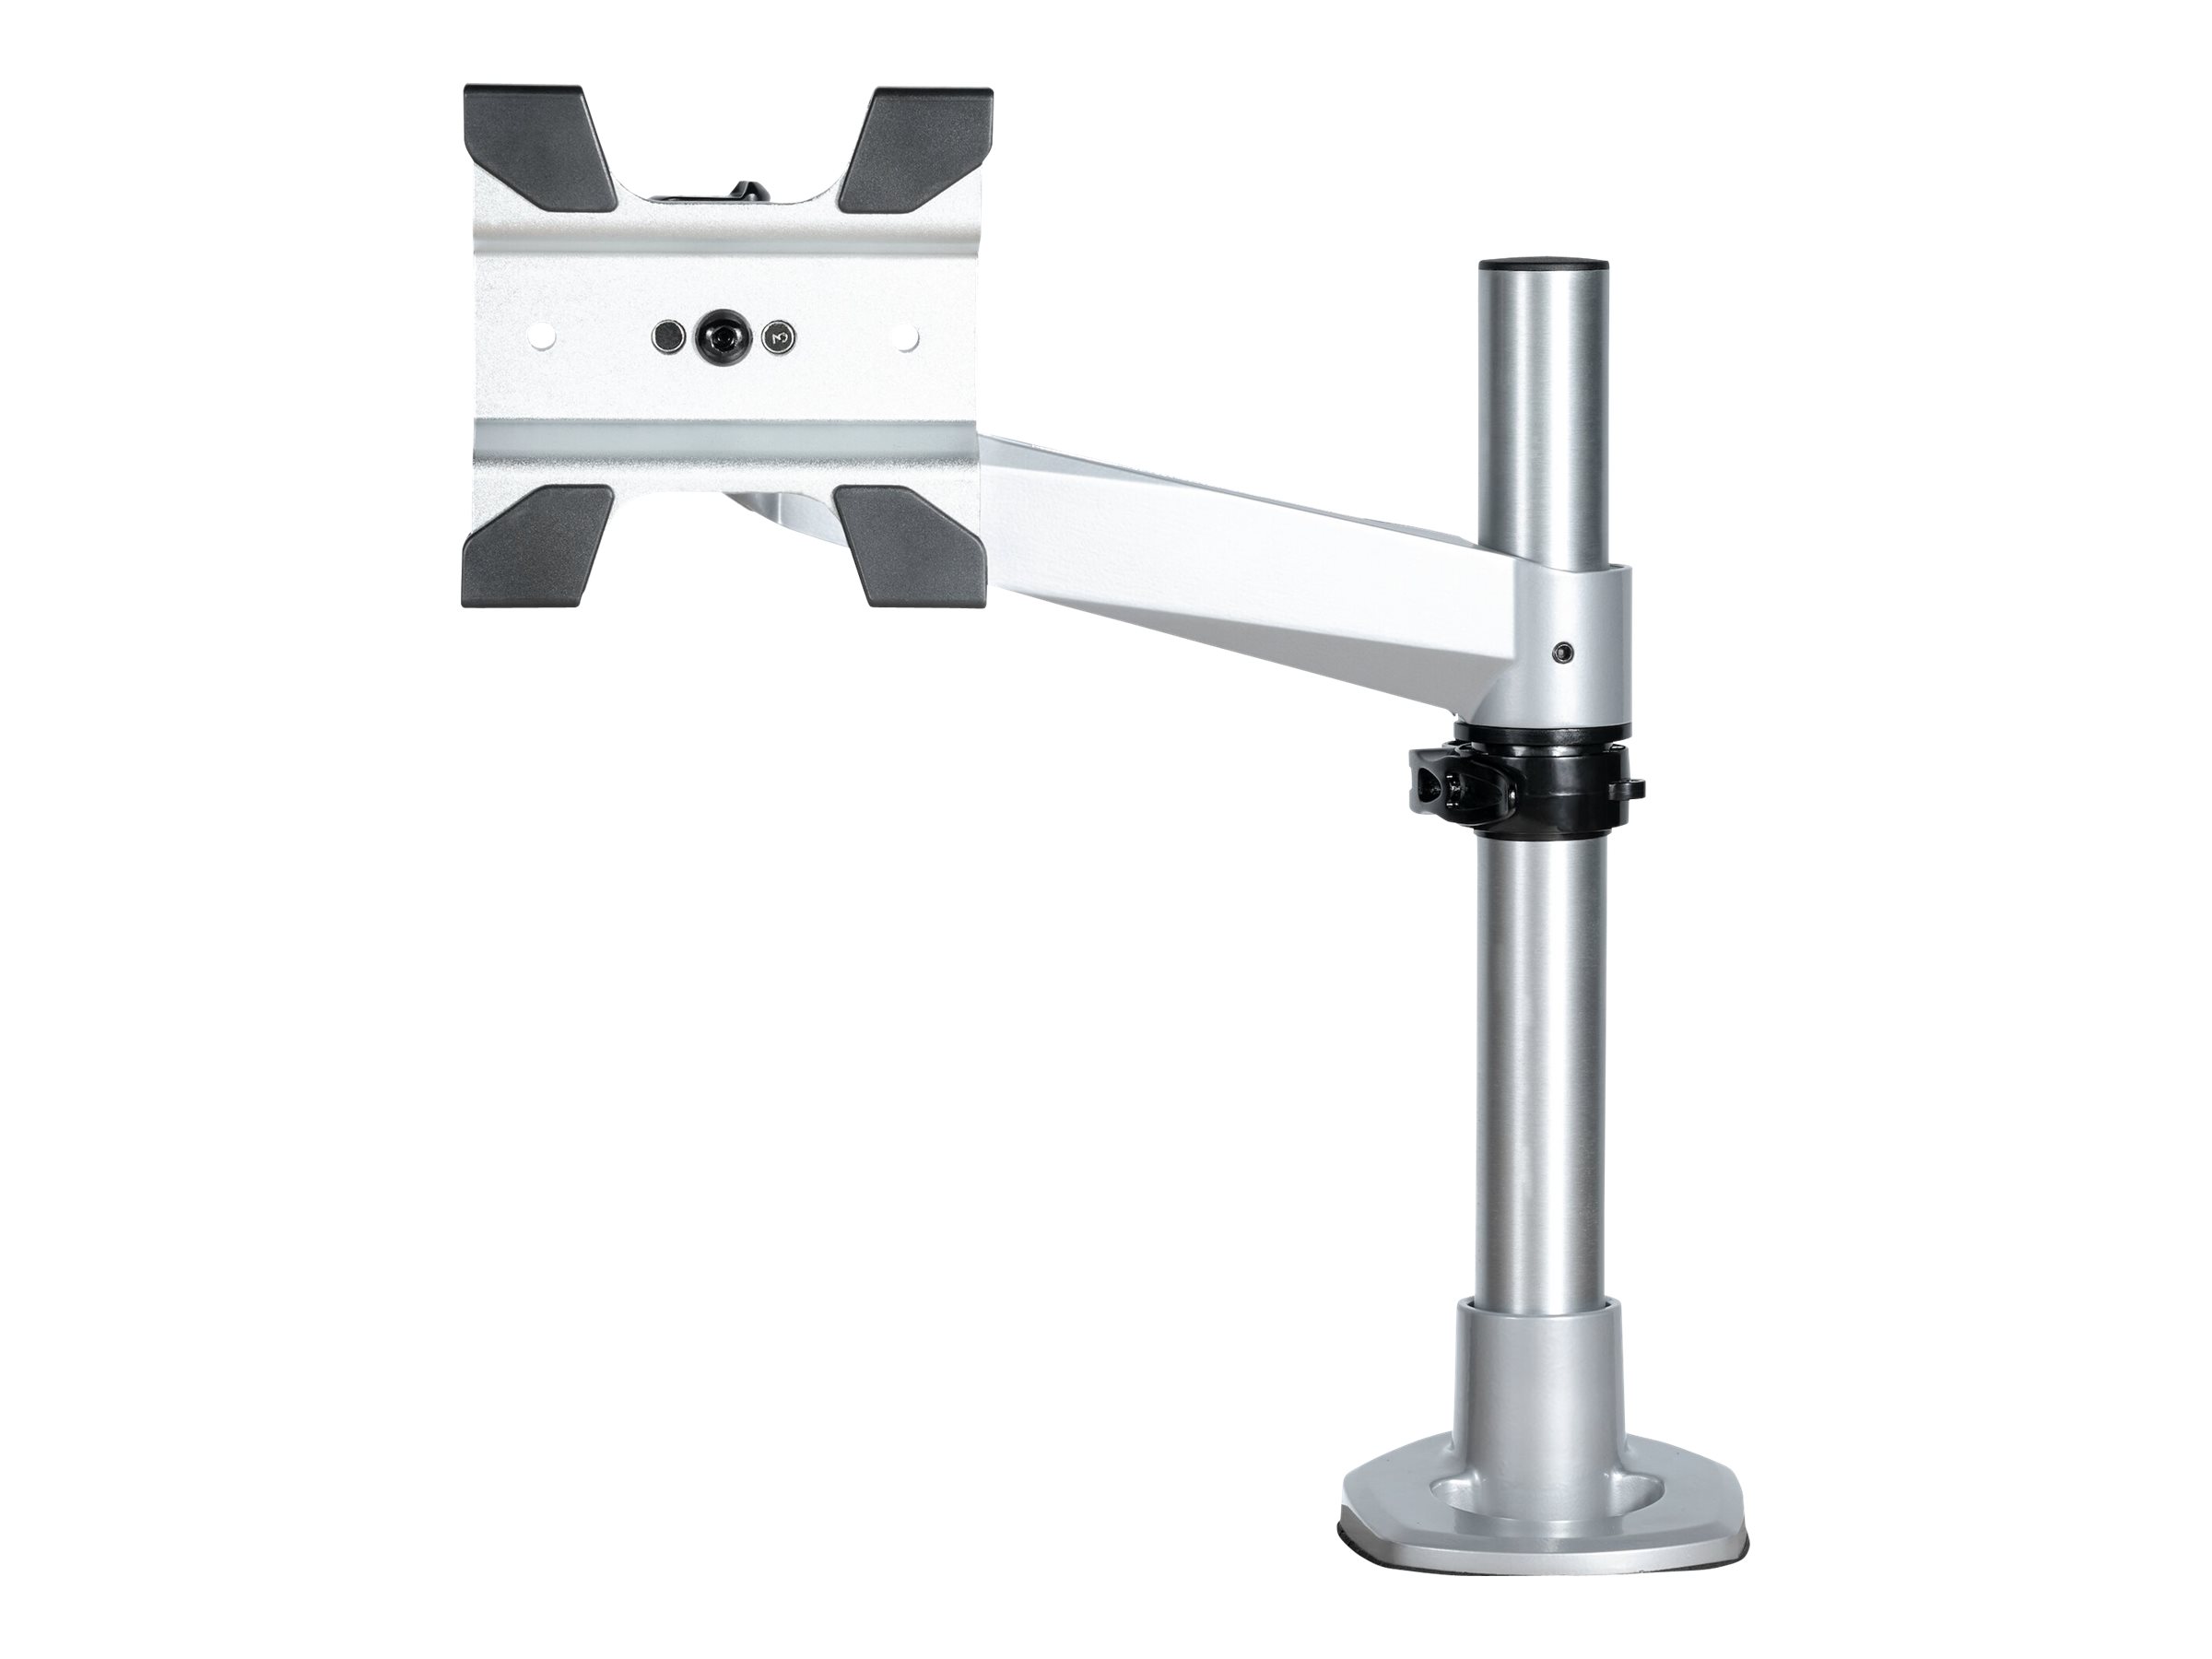 StarTech.com Desk Mount Monitor Arm, VESA or Apple iMac/Thunderbolt Display up to 14kg, Articulating Height Adjustable Single Desktop Monitor Pole Mount, Desk Clamp or Grommet, Silver - Small Footprint Design (ARMPIVOTB2)